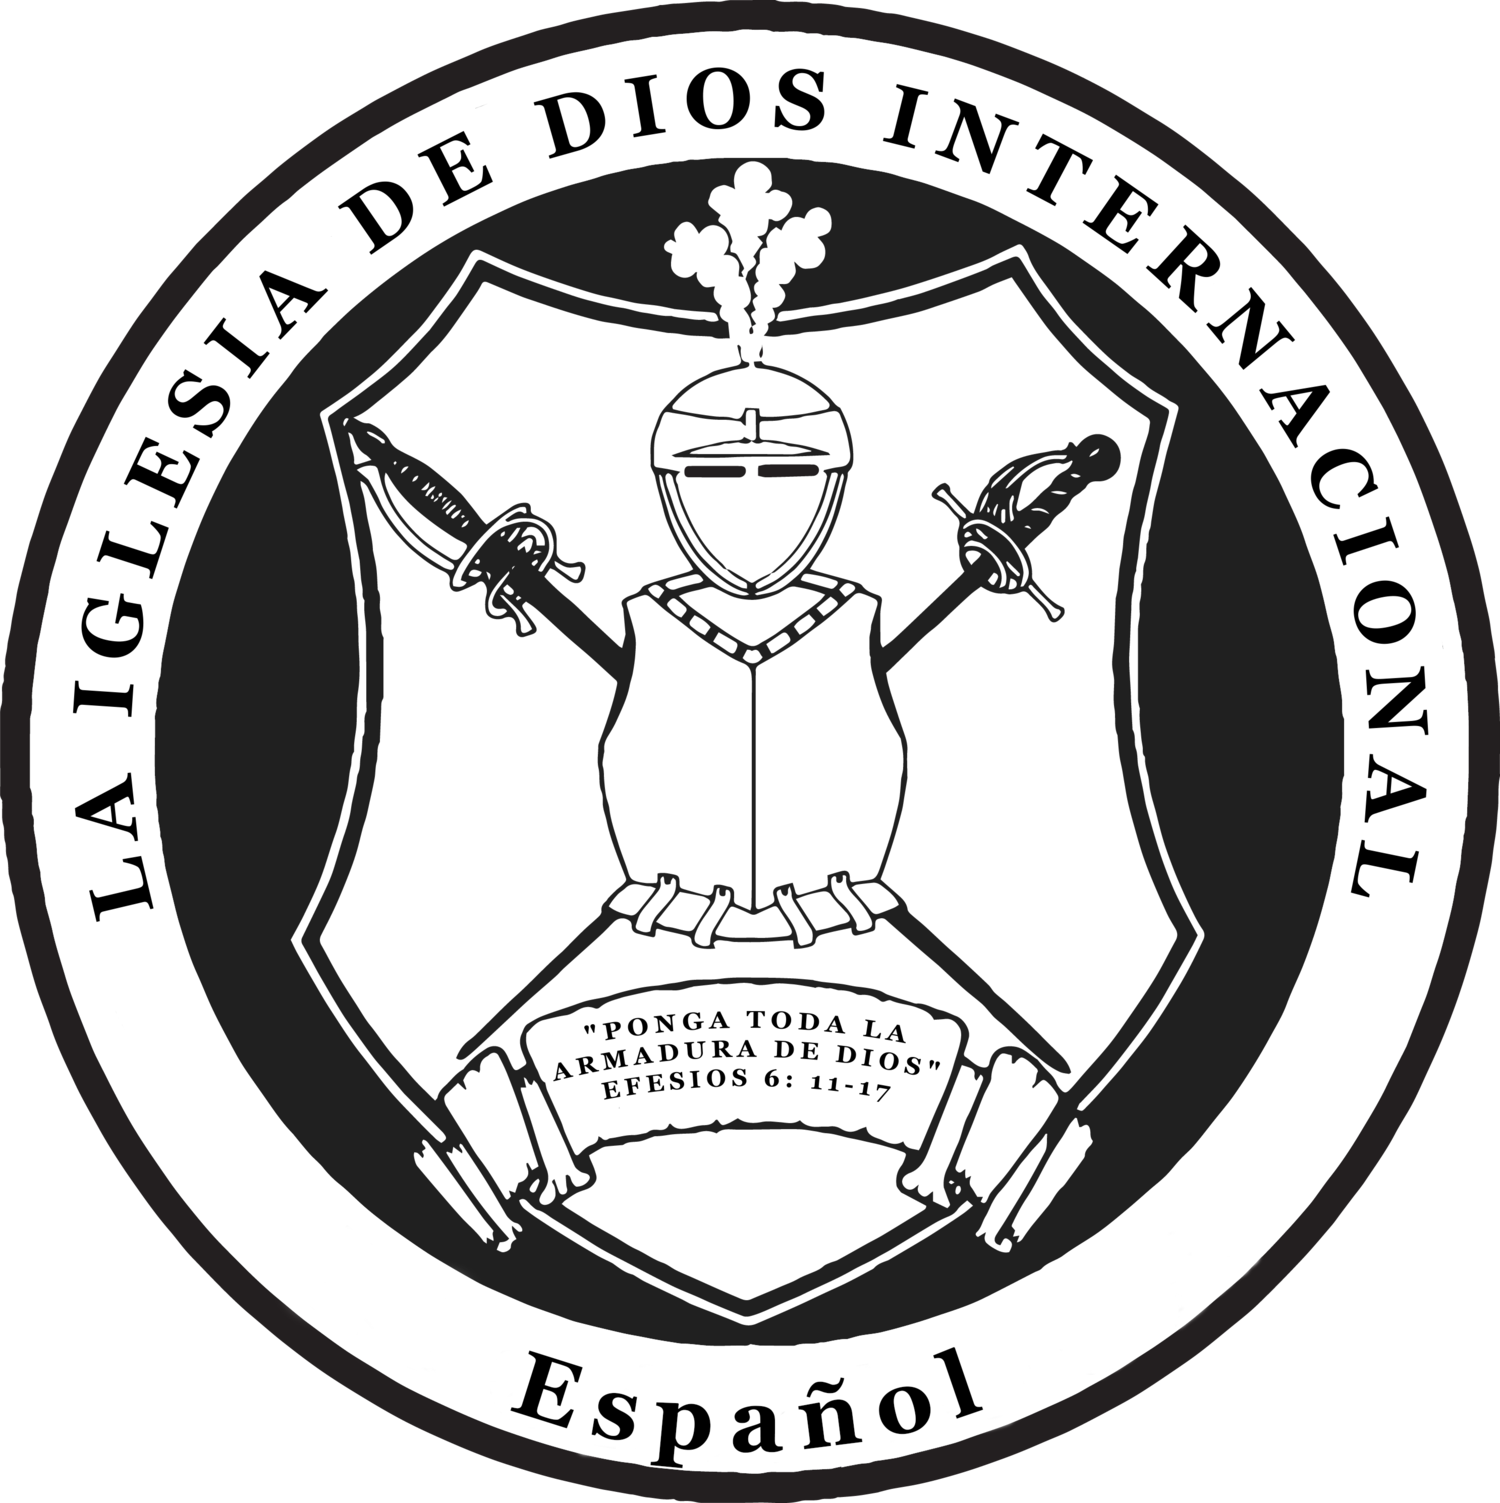 La Iglesia de Dios Internacional